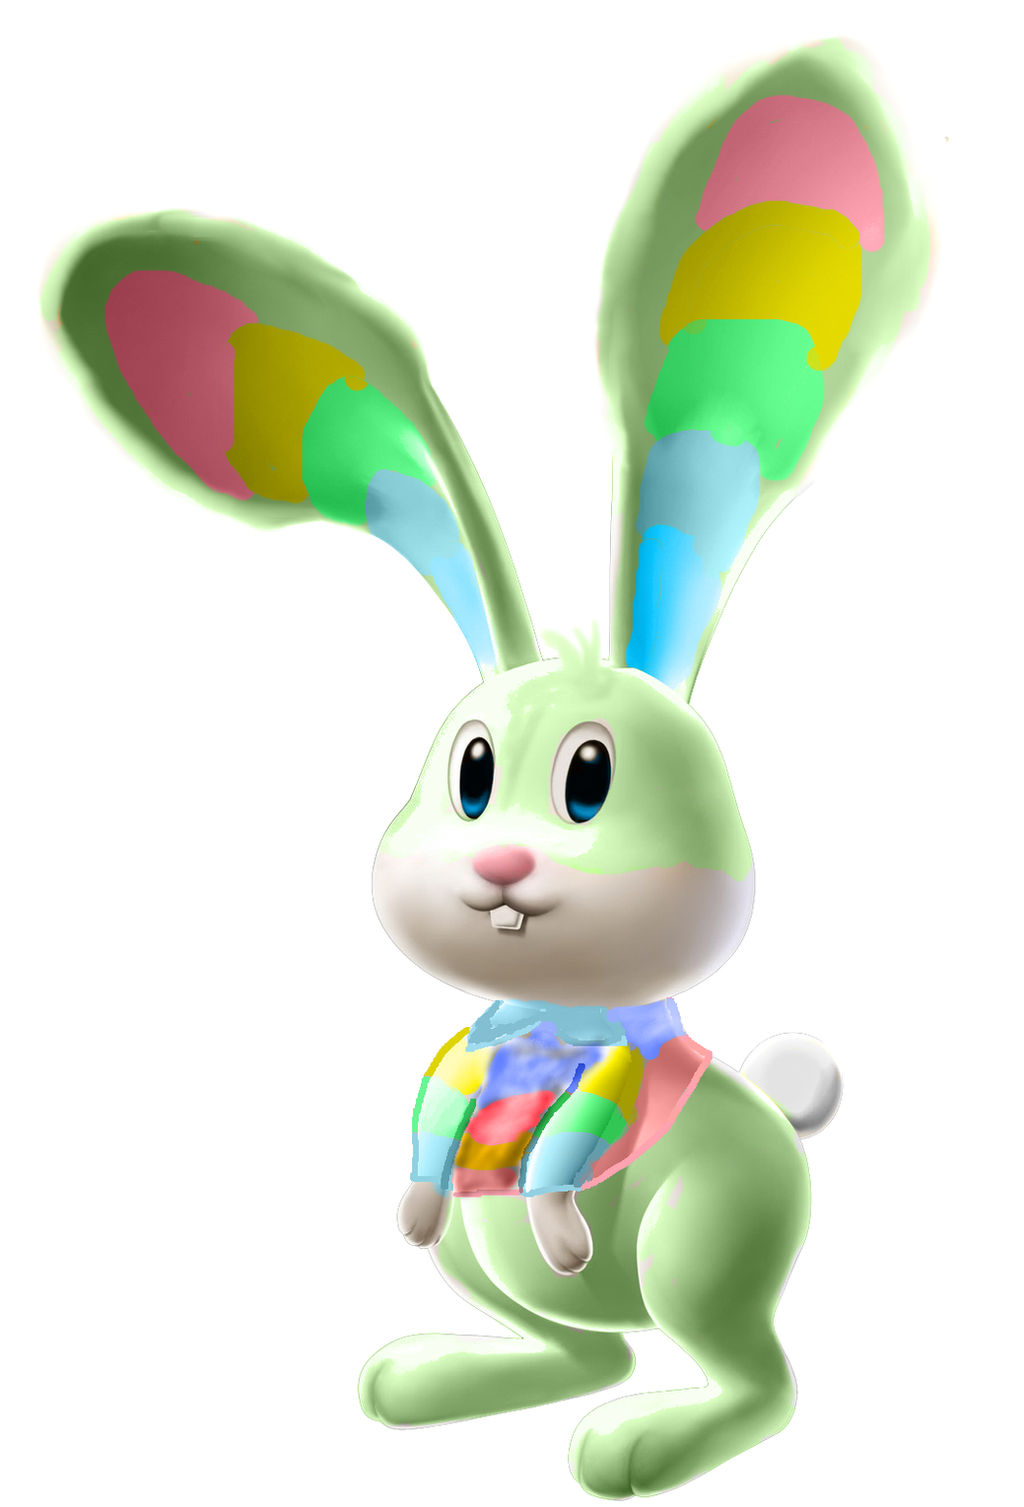 Rainbow Rabbit 3d by Aso-Designer on DeviantArt